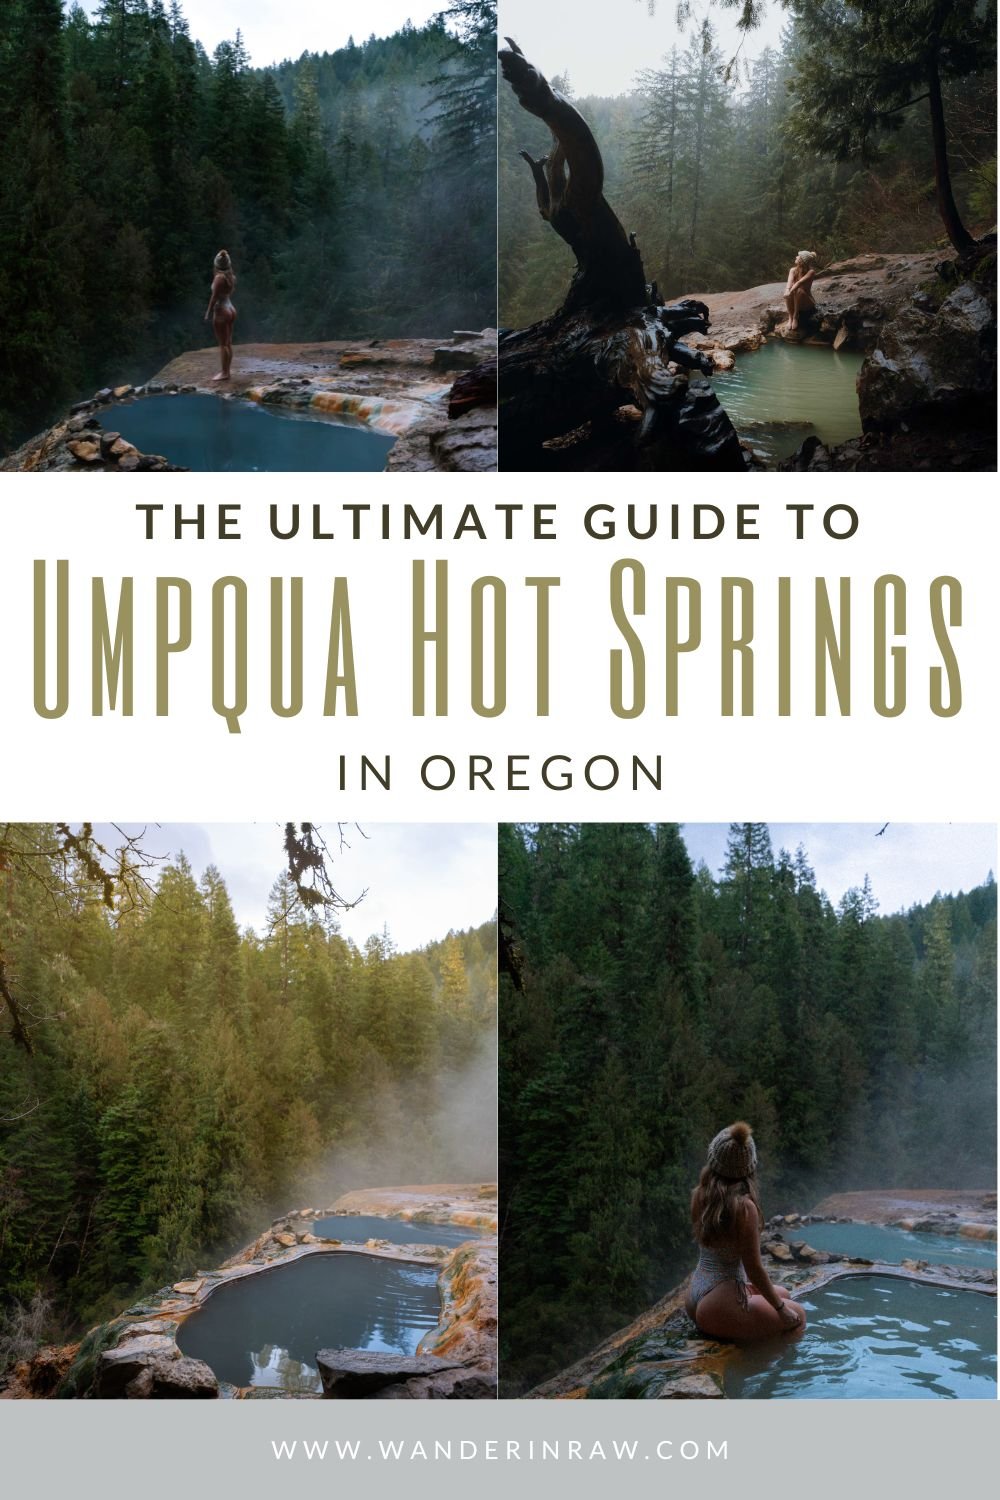 The Ultimate Guide to Umpqua Hot Springs in Oregon